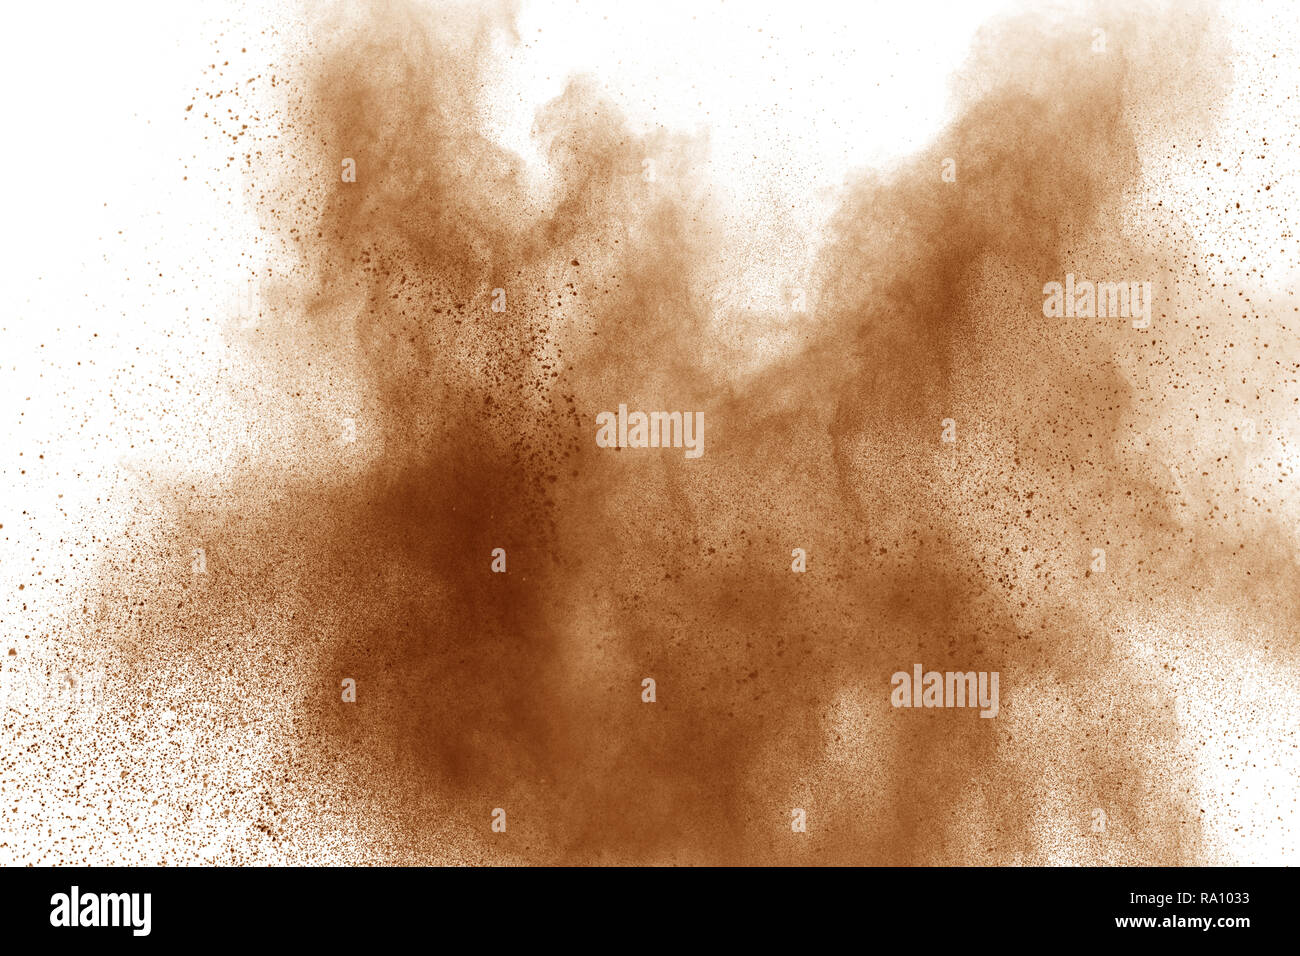 Brown powder explosion on white background. Stock Photo